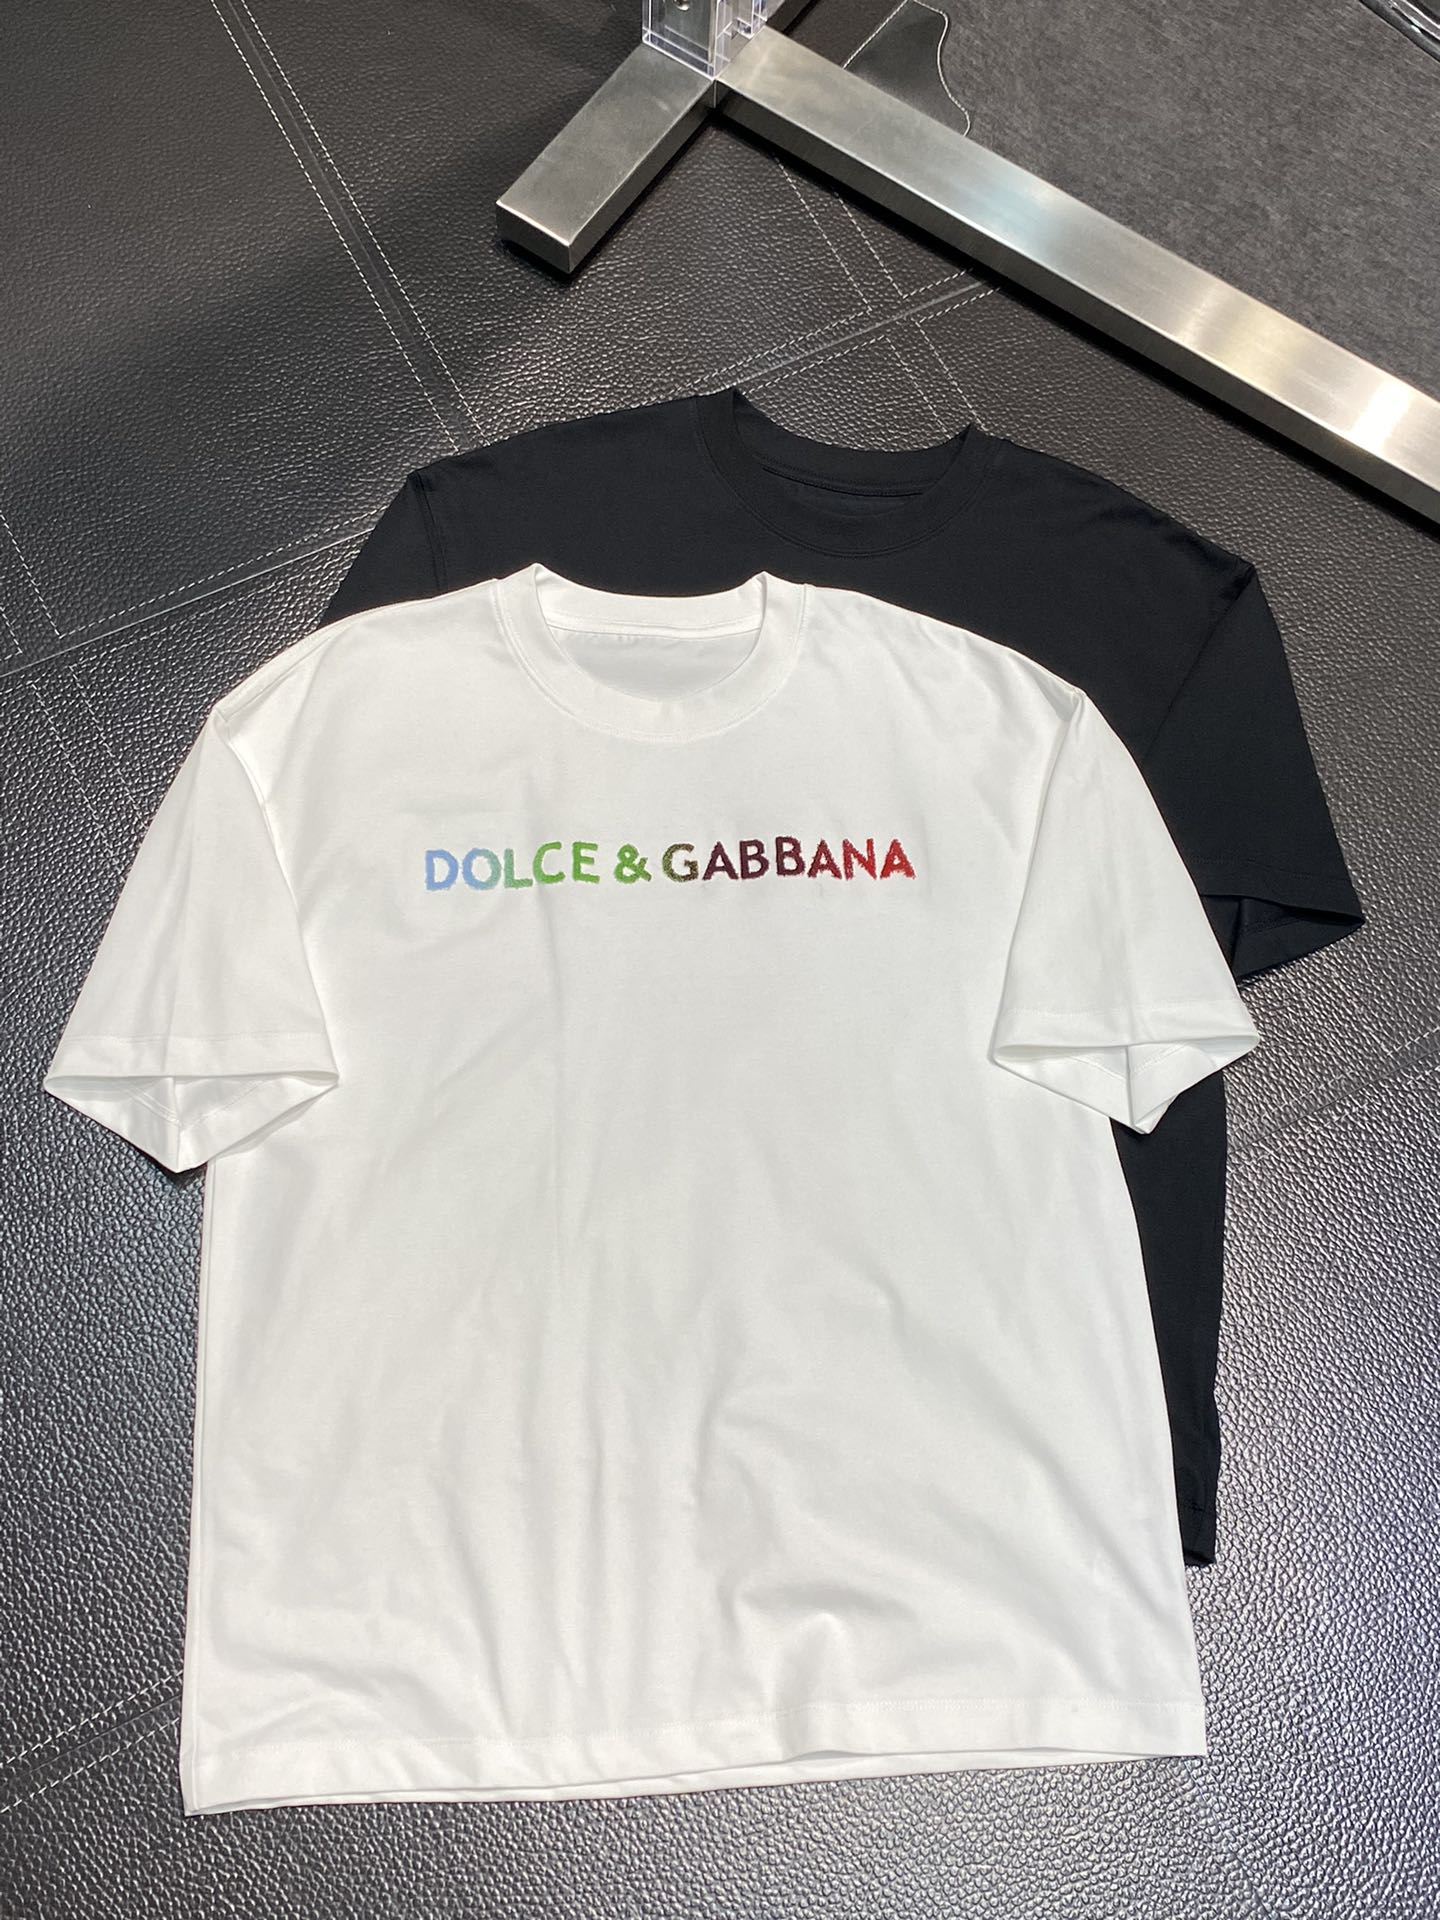 Dolce & Gabbana Clothing T-Shirt Most Desired
 Men Fashion Short Sleeve